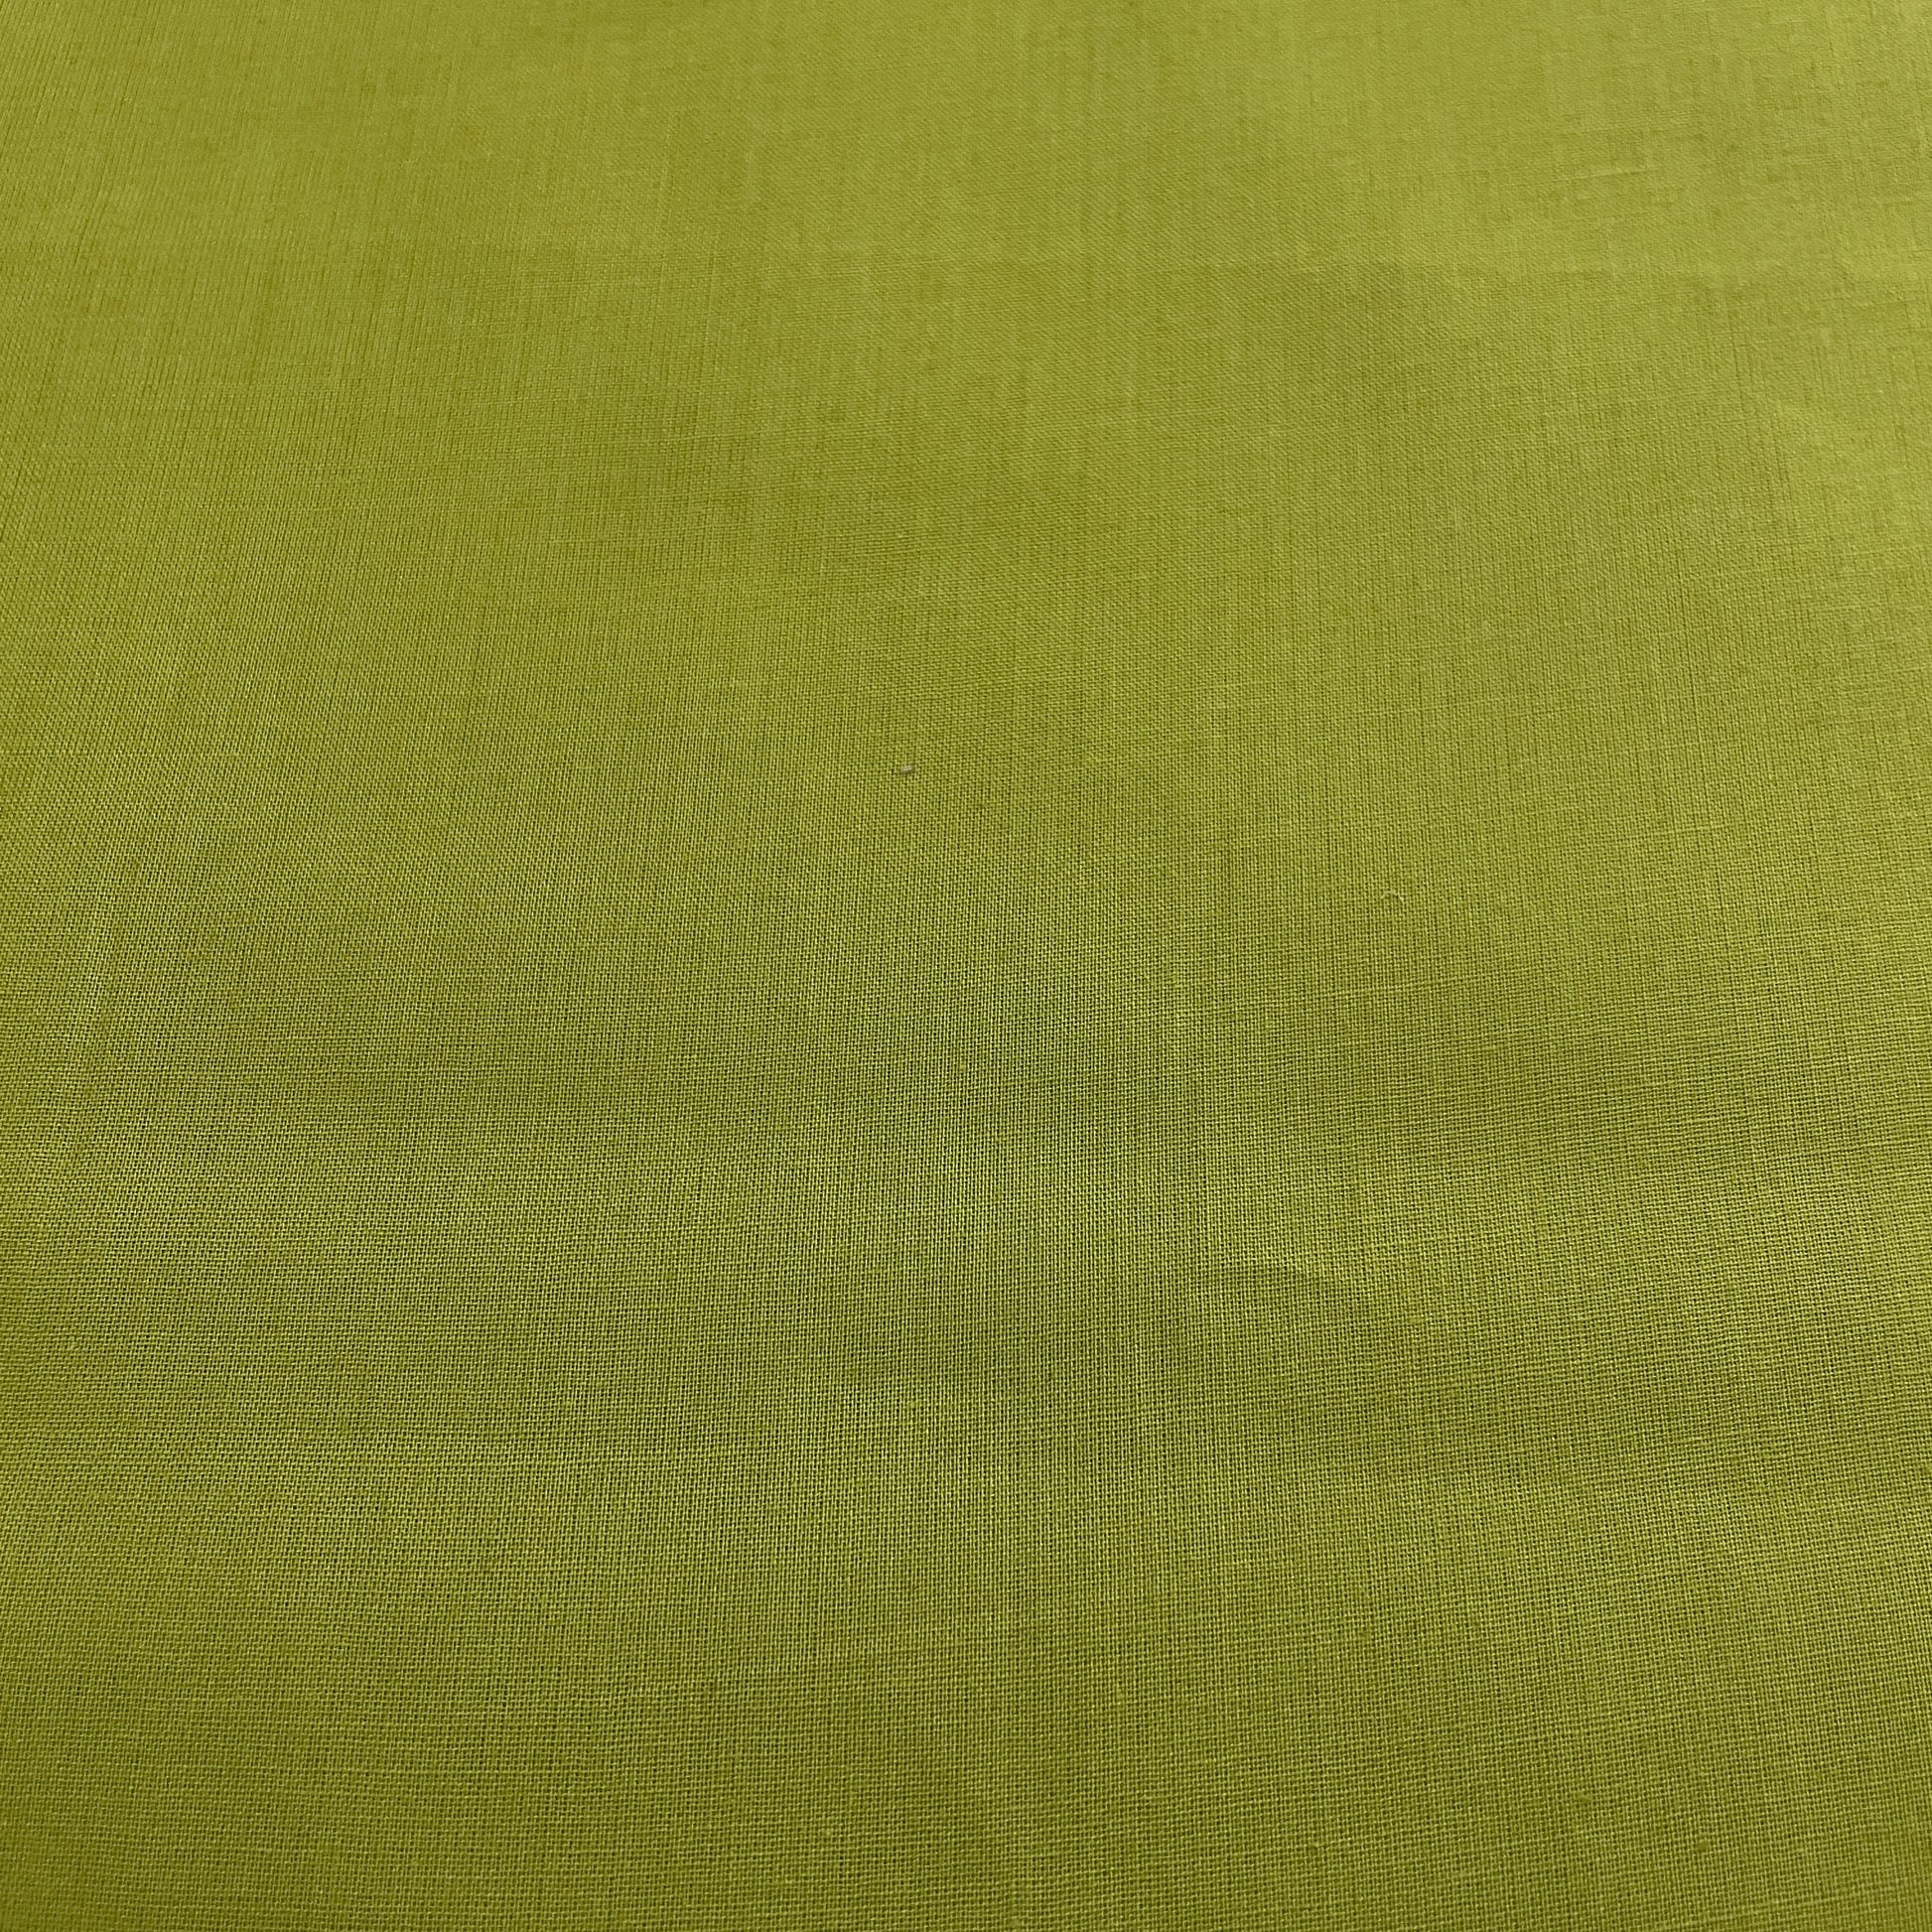 Premium Lemon Green Solid Cotton Mulmul Fabric